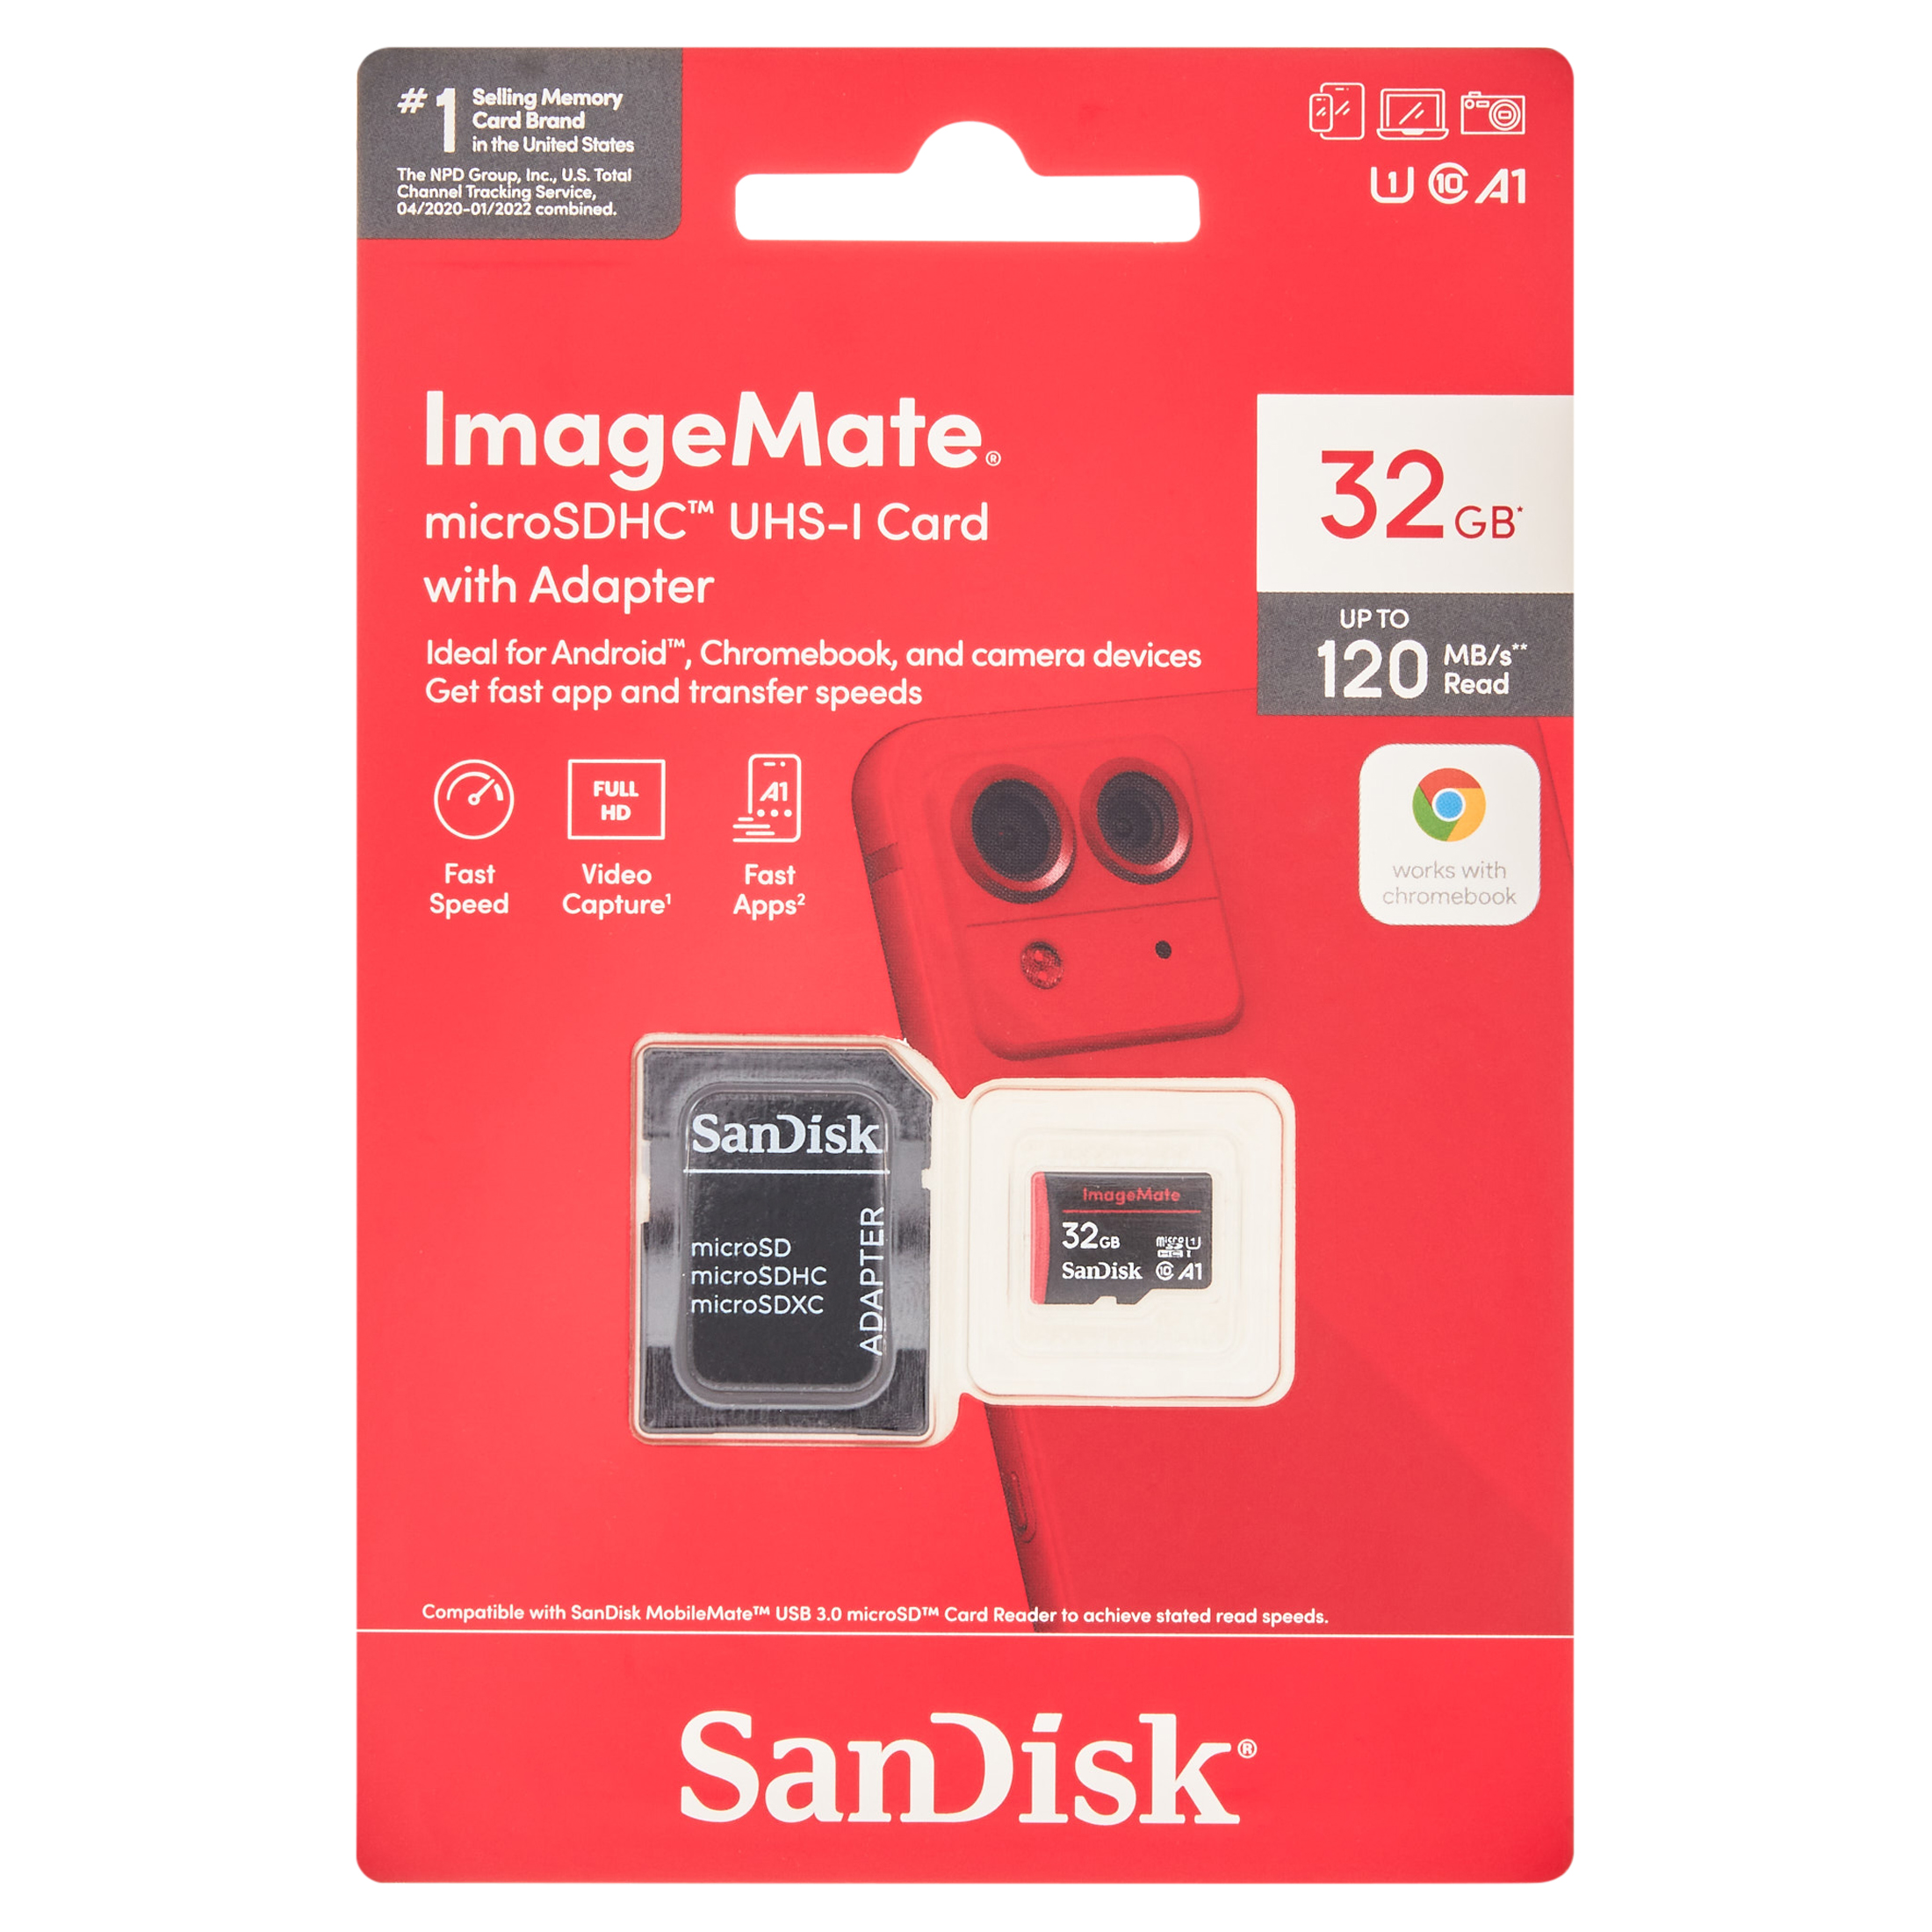 SanDisk 32GB ImageMate microSDHC UHS-1 Memory Card - Up to 120MB/s - SDSQUA4-032G-Aw6ka - image 3 of 11